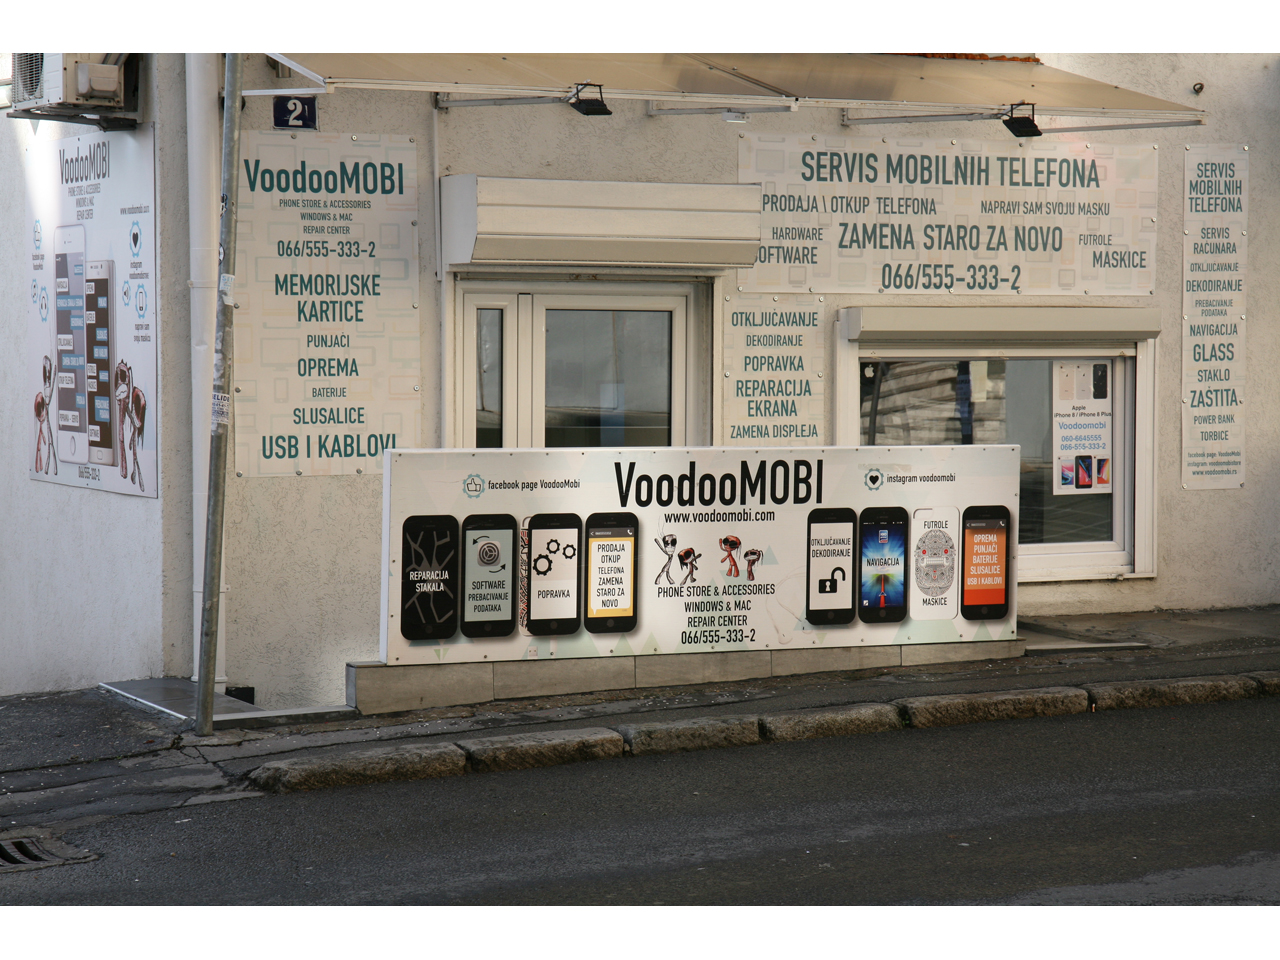 VOODOOMOBI PHONE STORE & ACCESSORIES WINDOWS & MAC REPAIR CENTER Servisi mobilnih telefona Beograd